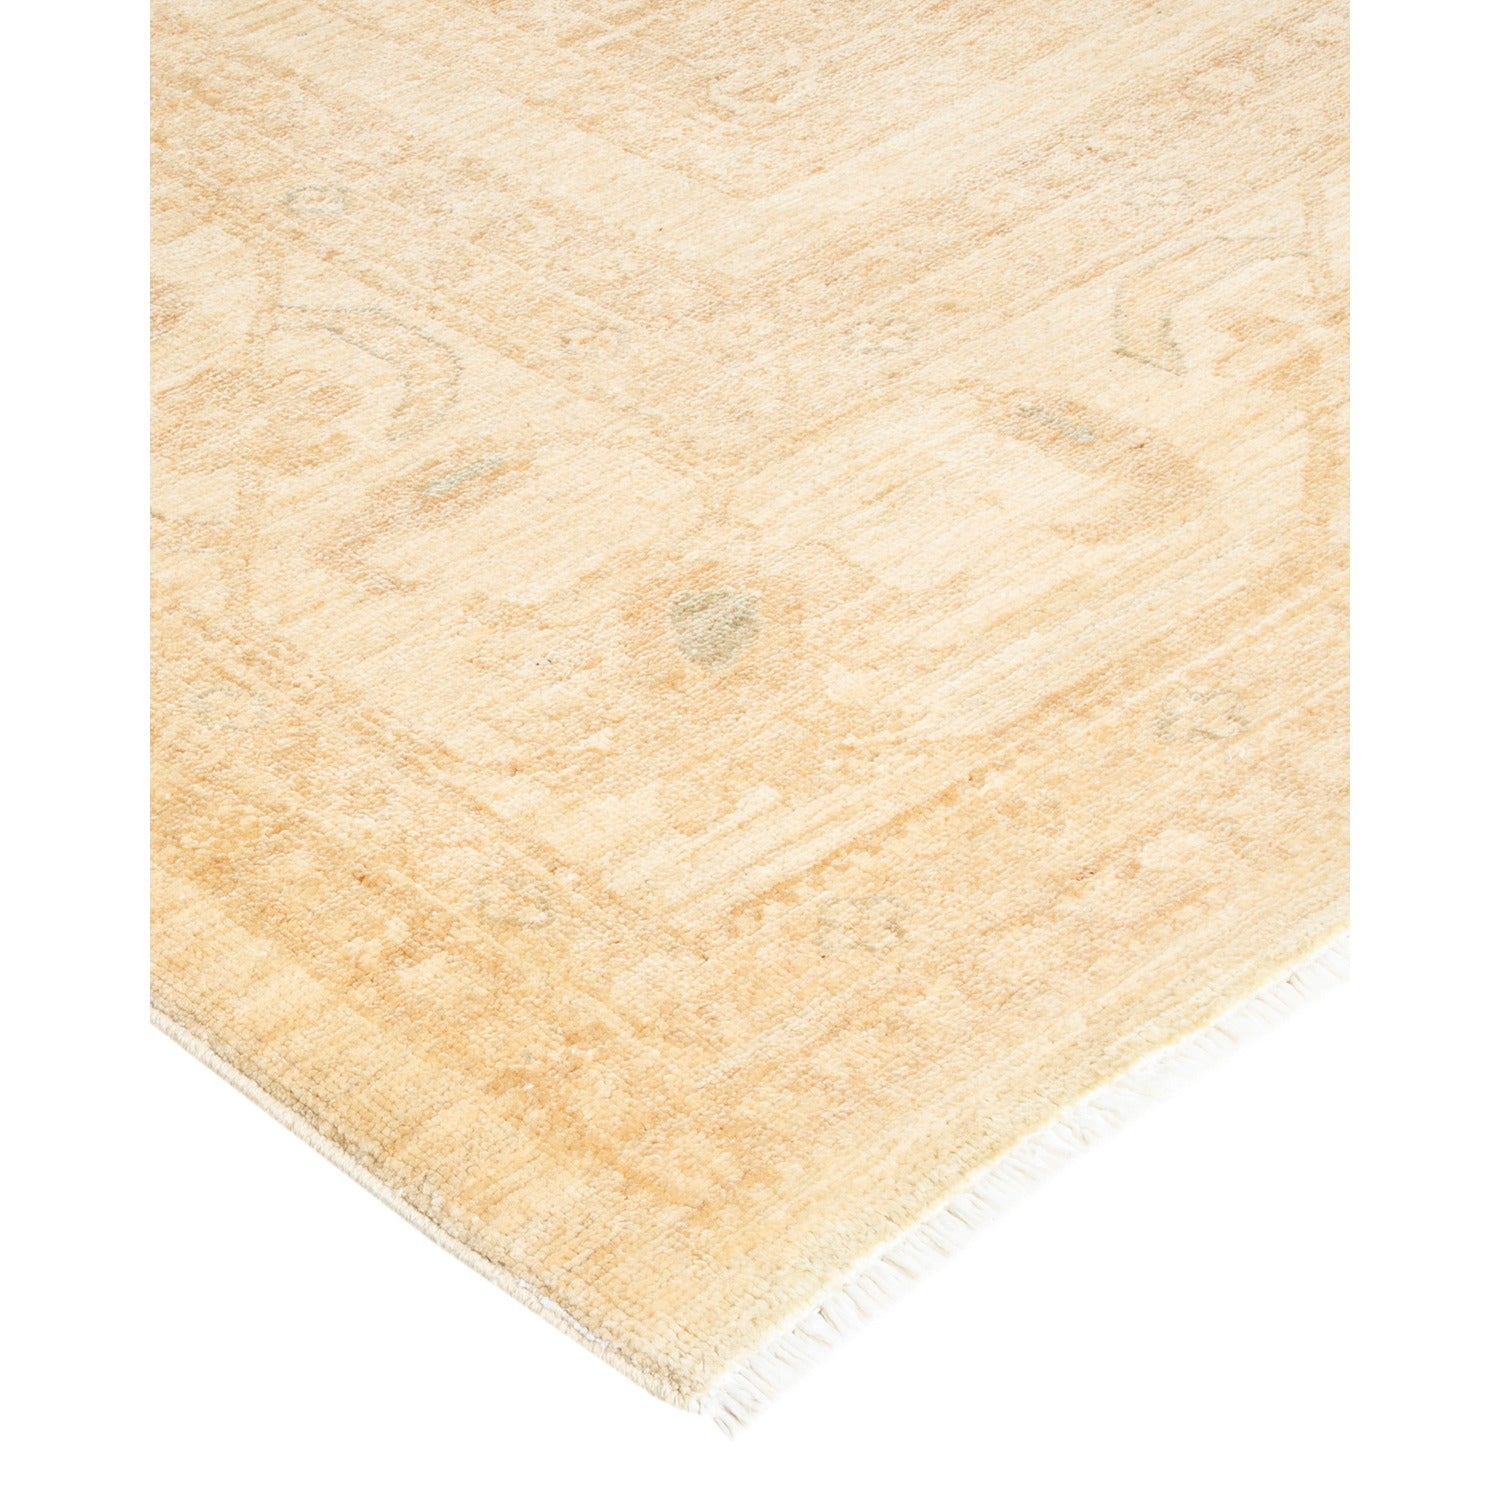 Vintage-inspired patterned rug with subtle faded design on white backdrop.